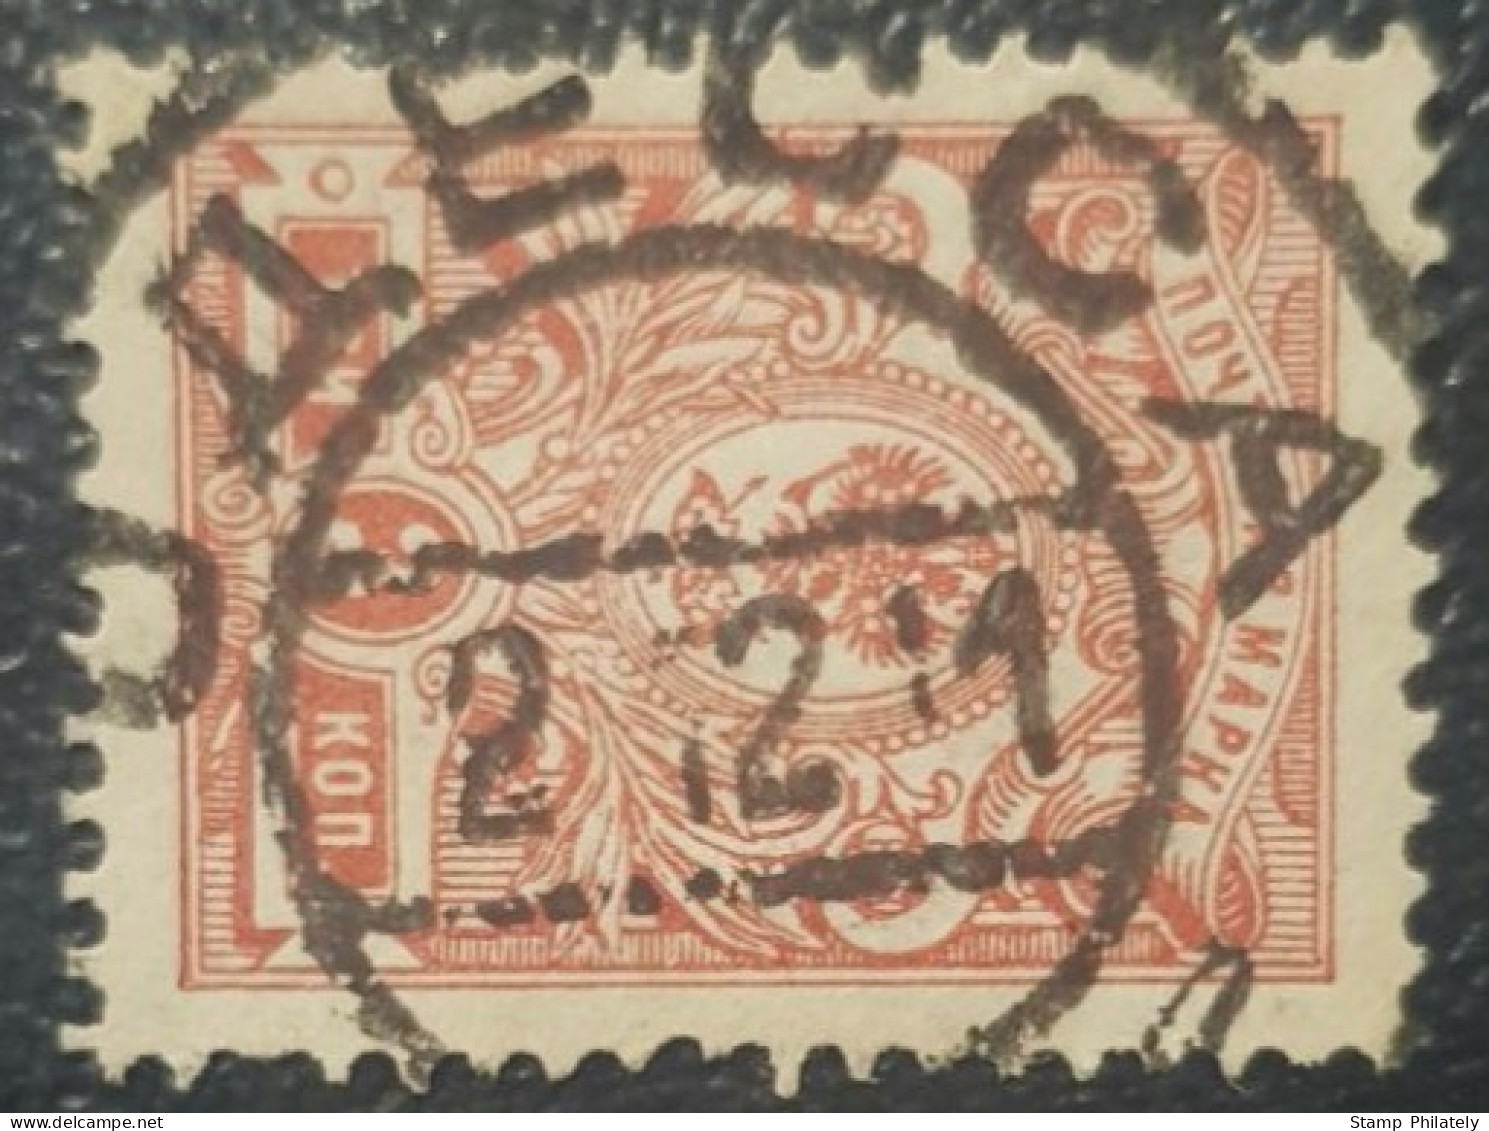 Russia Classic Used Postmark Stamp - Nuevos